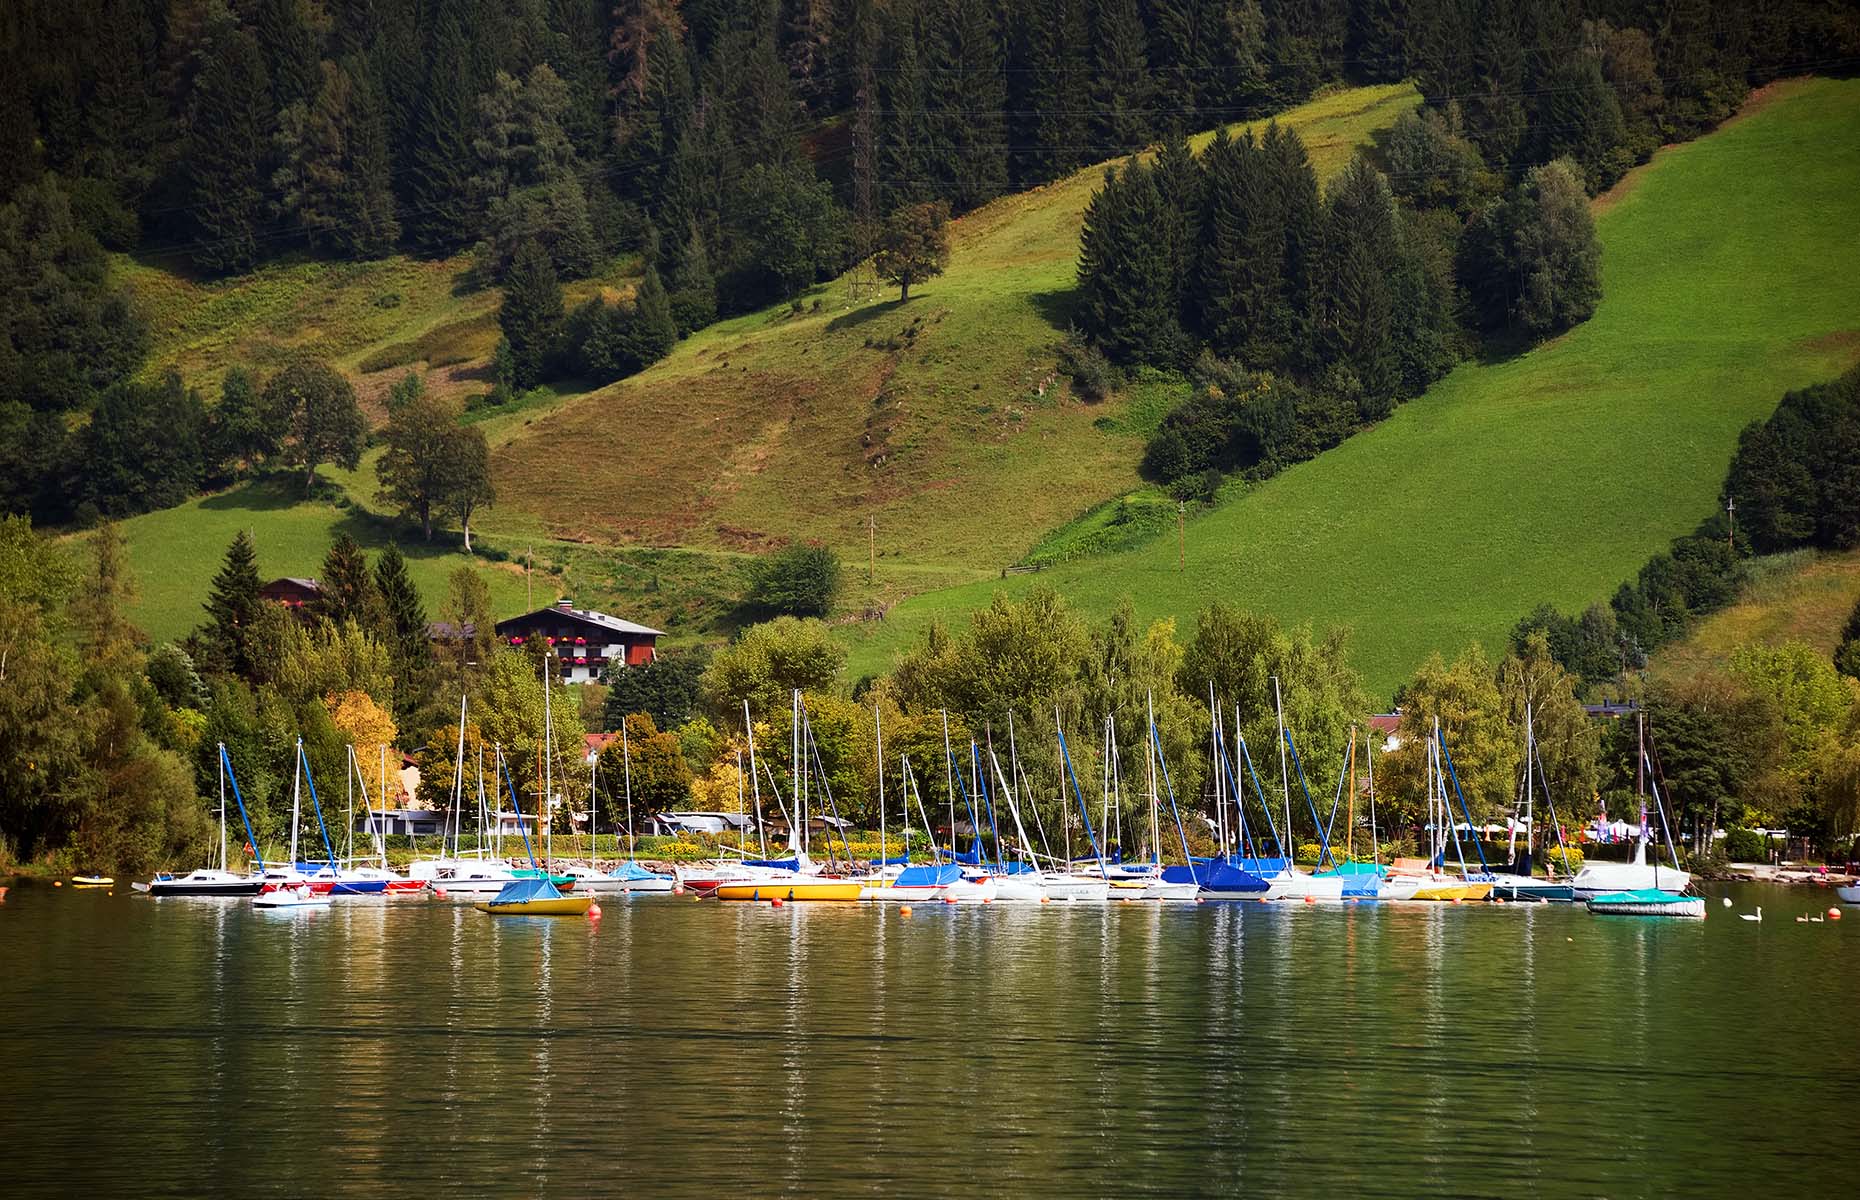 Lake Zell (Image: Mikadun/Shutterstock)